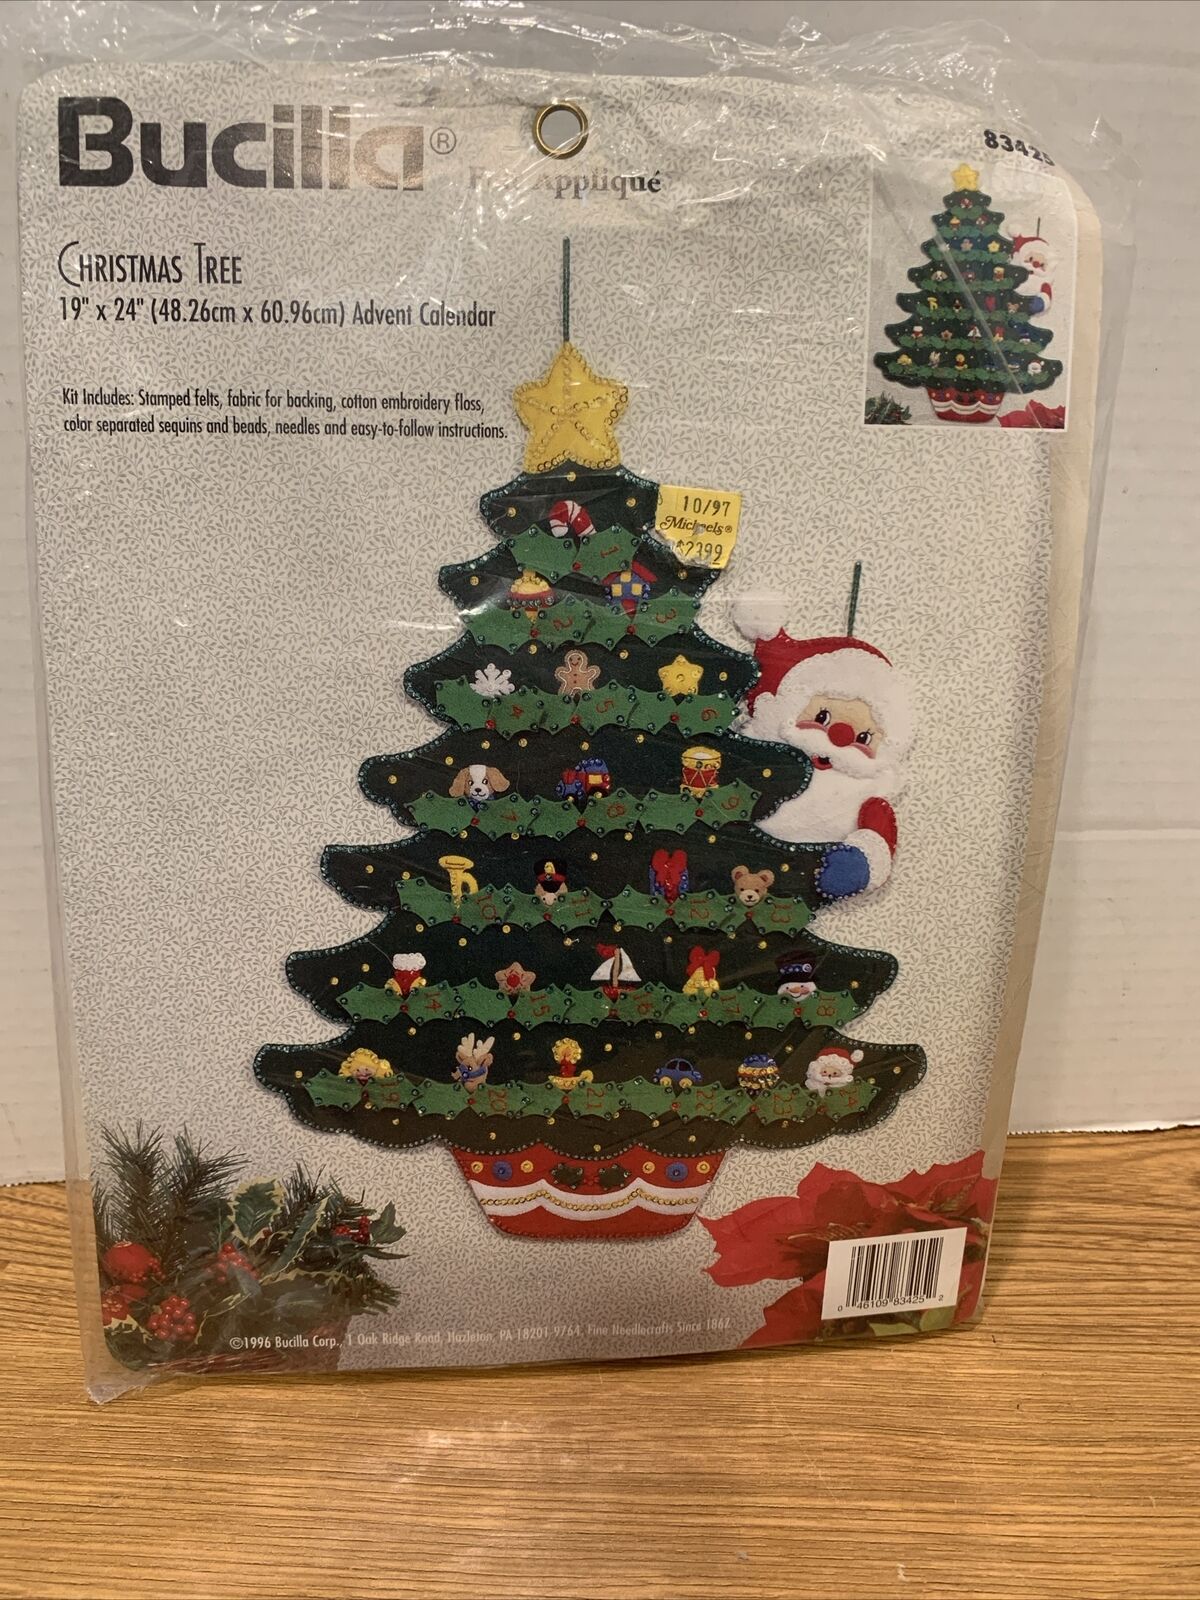 Bucilla 83425 Christmas Tree Advent Calendar Felt Applique Embroidery Kit OPEN